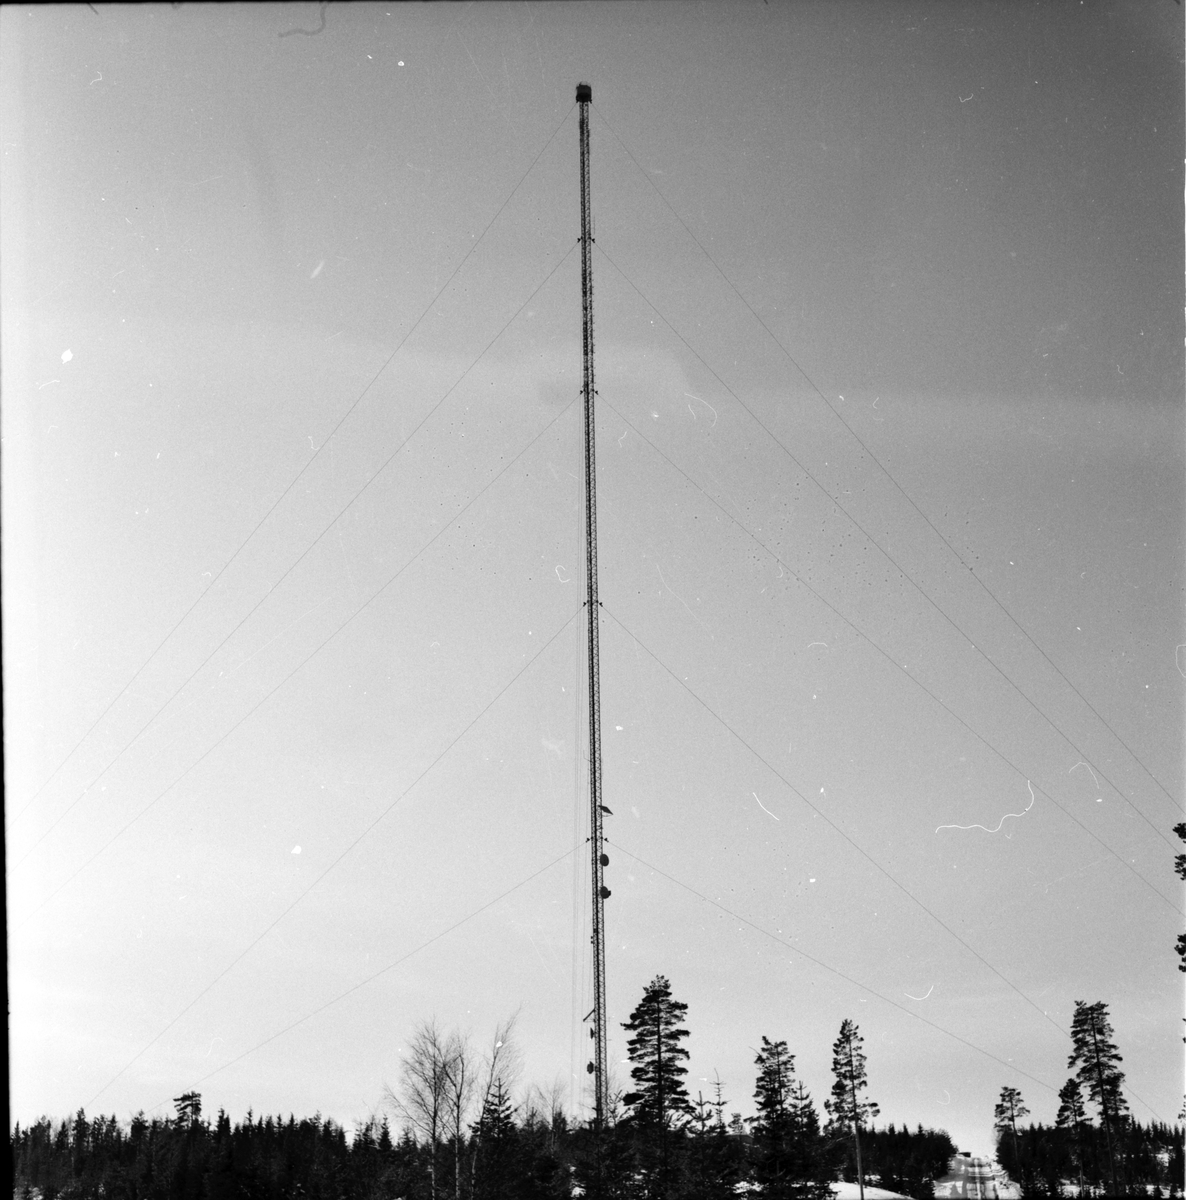 Arbrå,
Kyrkberget,
April 1969